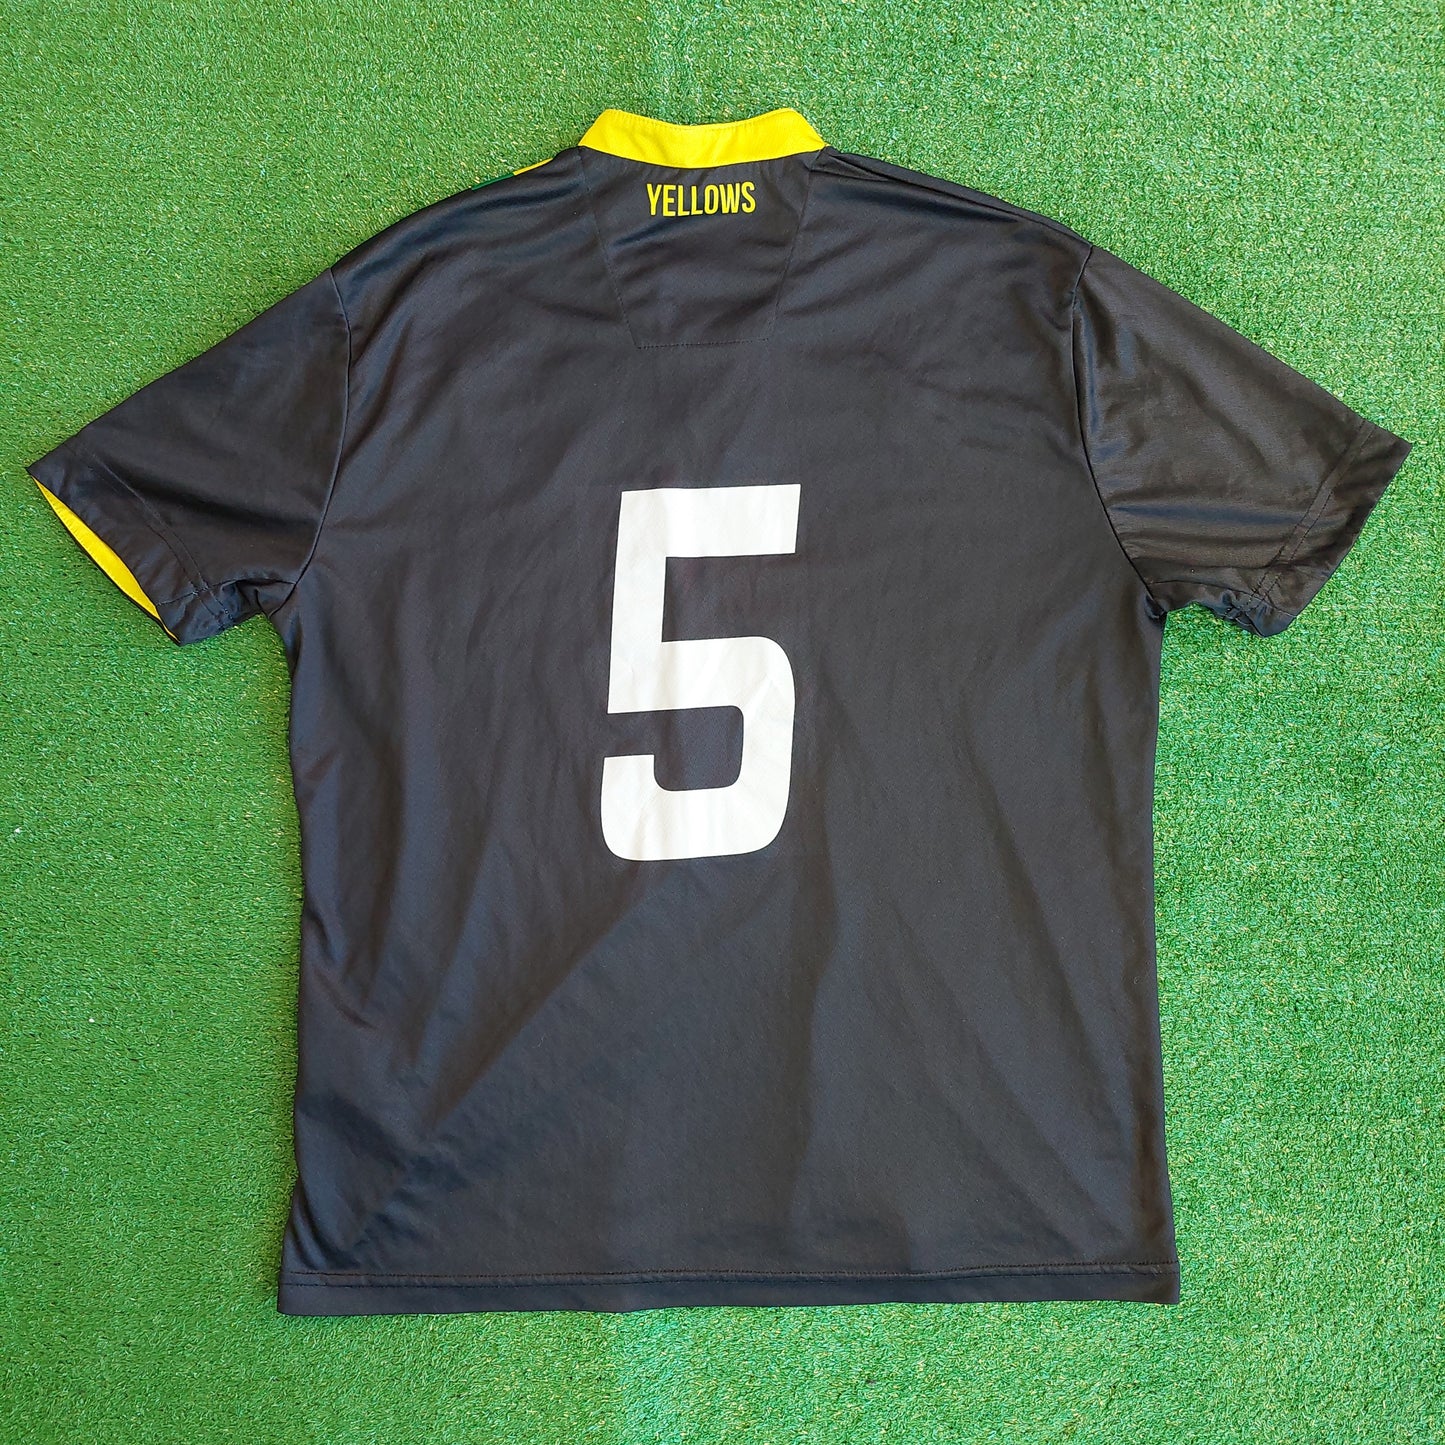 Norwich City 2016/17 Away Shirt (Very Good) - Size L